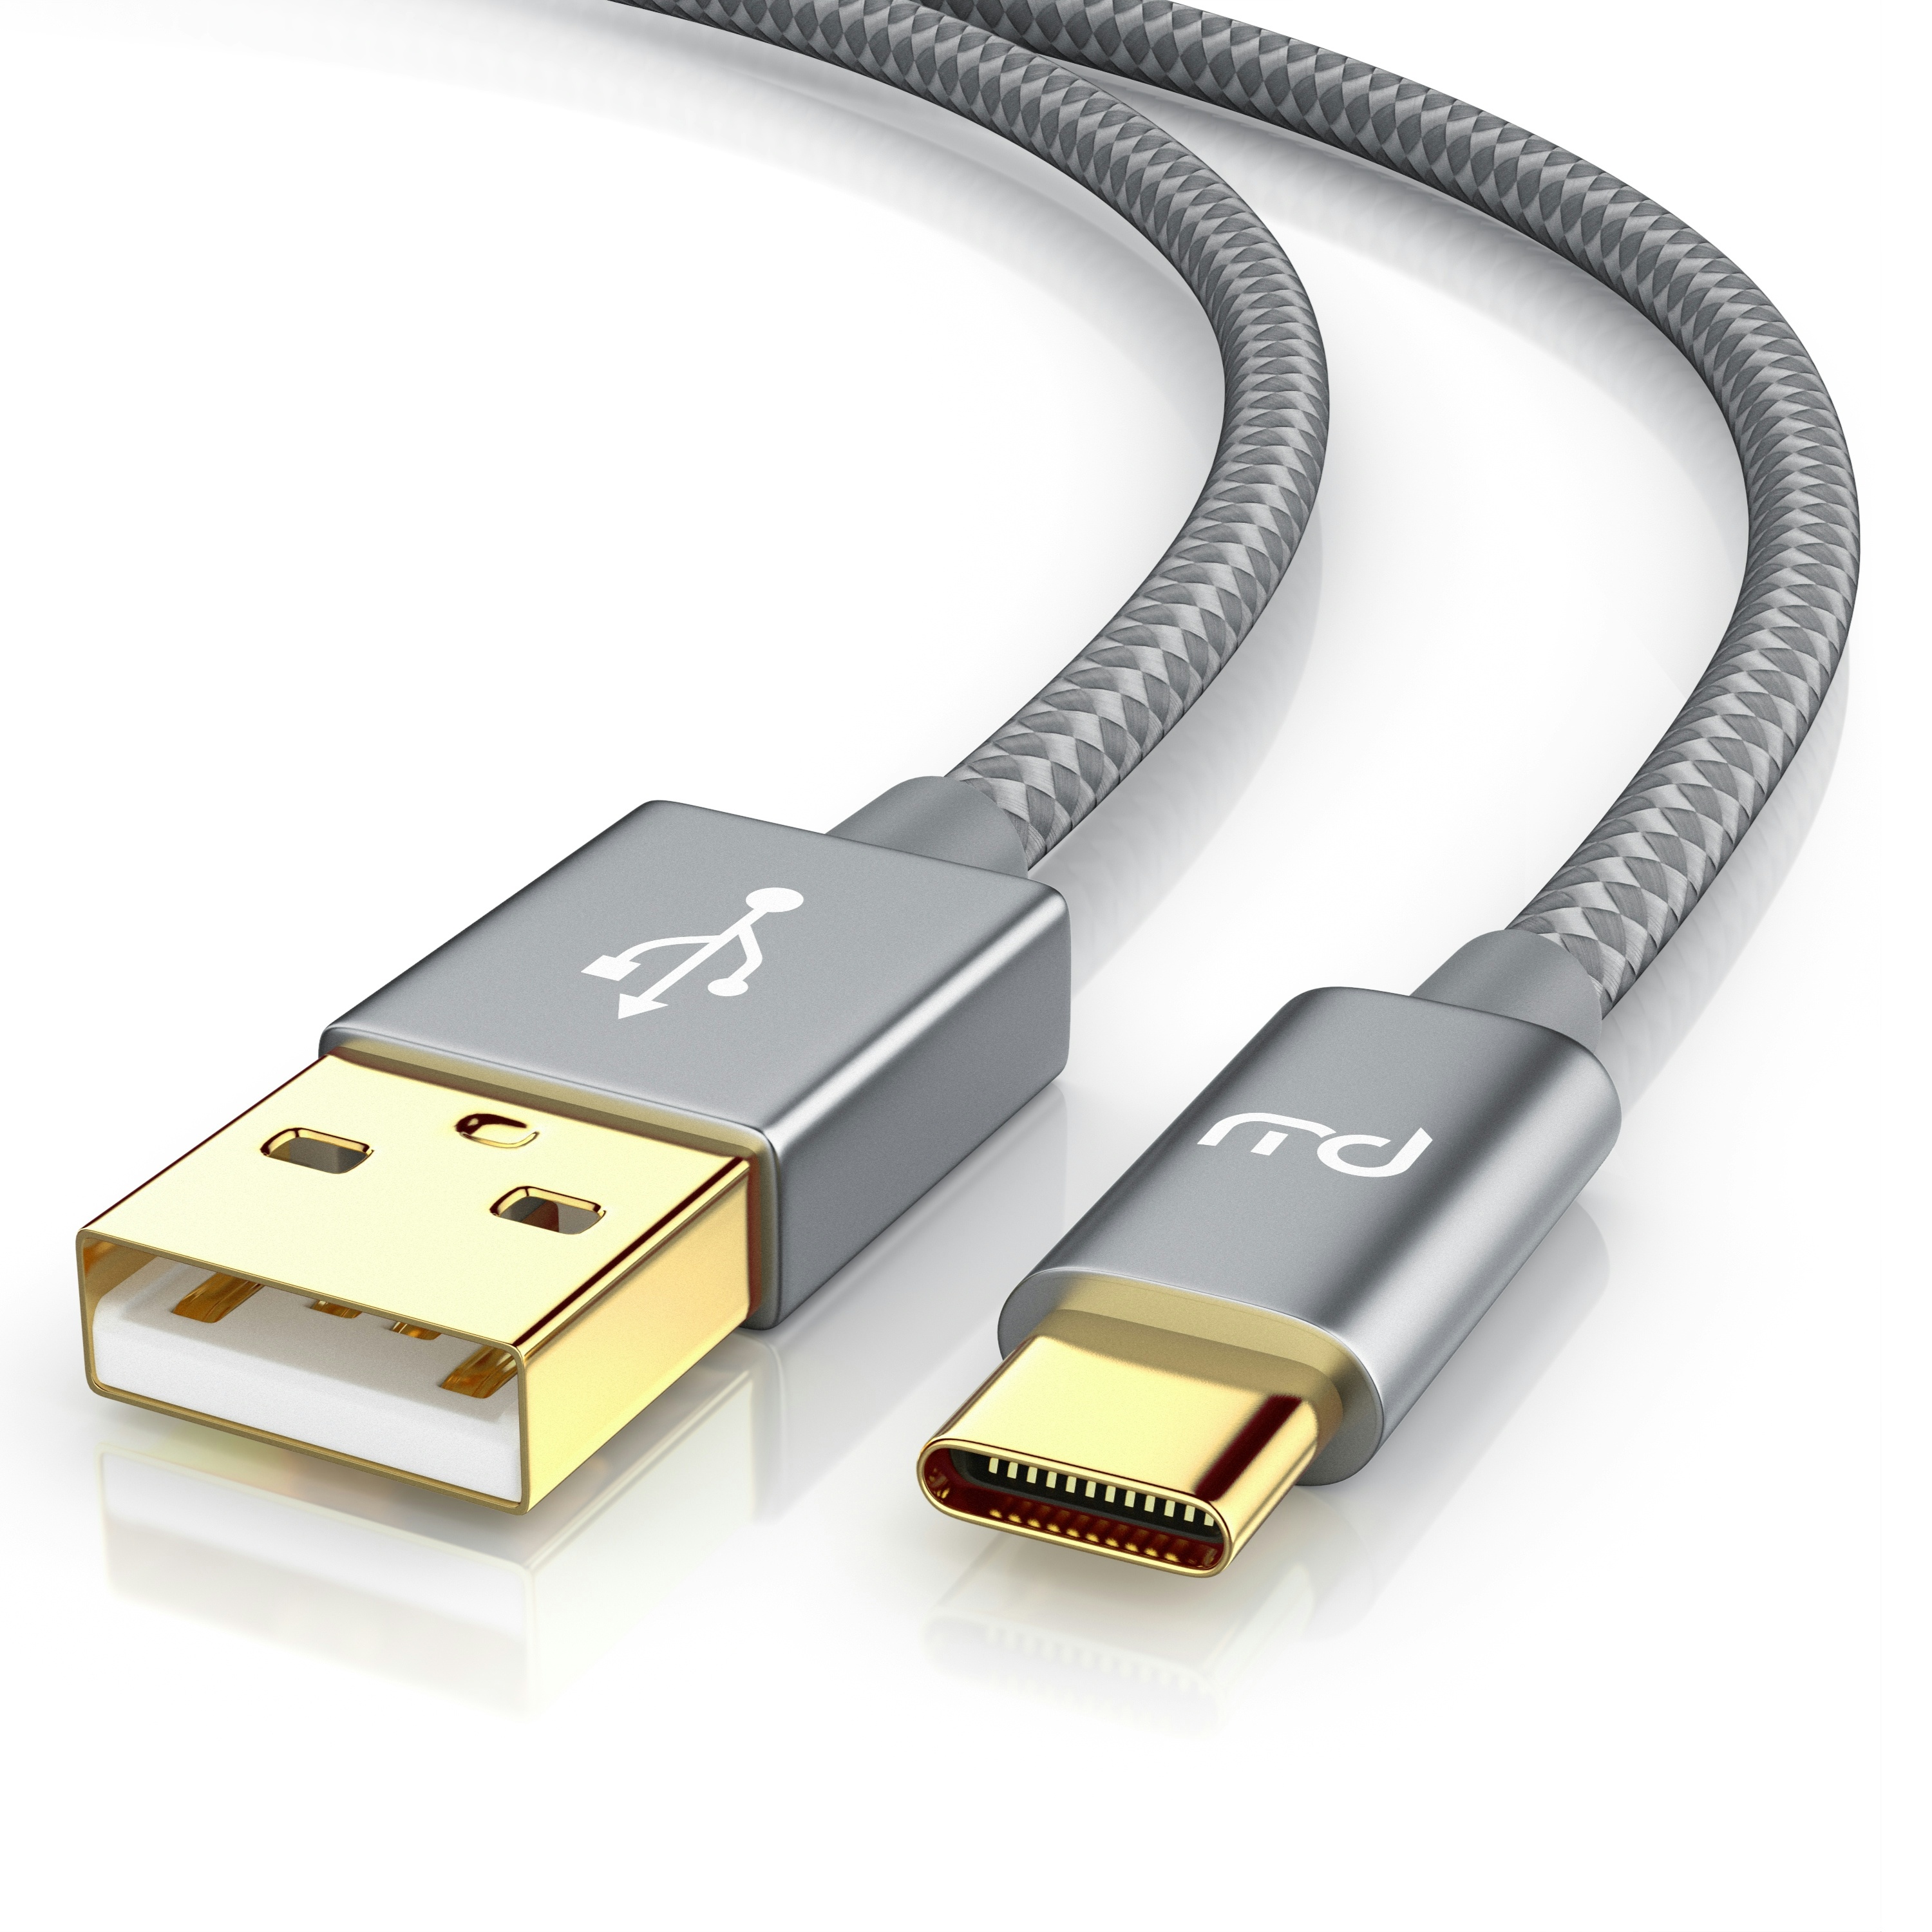 Primewire USB-C 3.1 zu USB 3.0 Typ A Kabel, Ladekabel, Datenkabel, Adapterkabel für Smartphone & Tablet - 2m